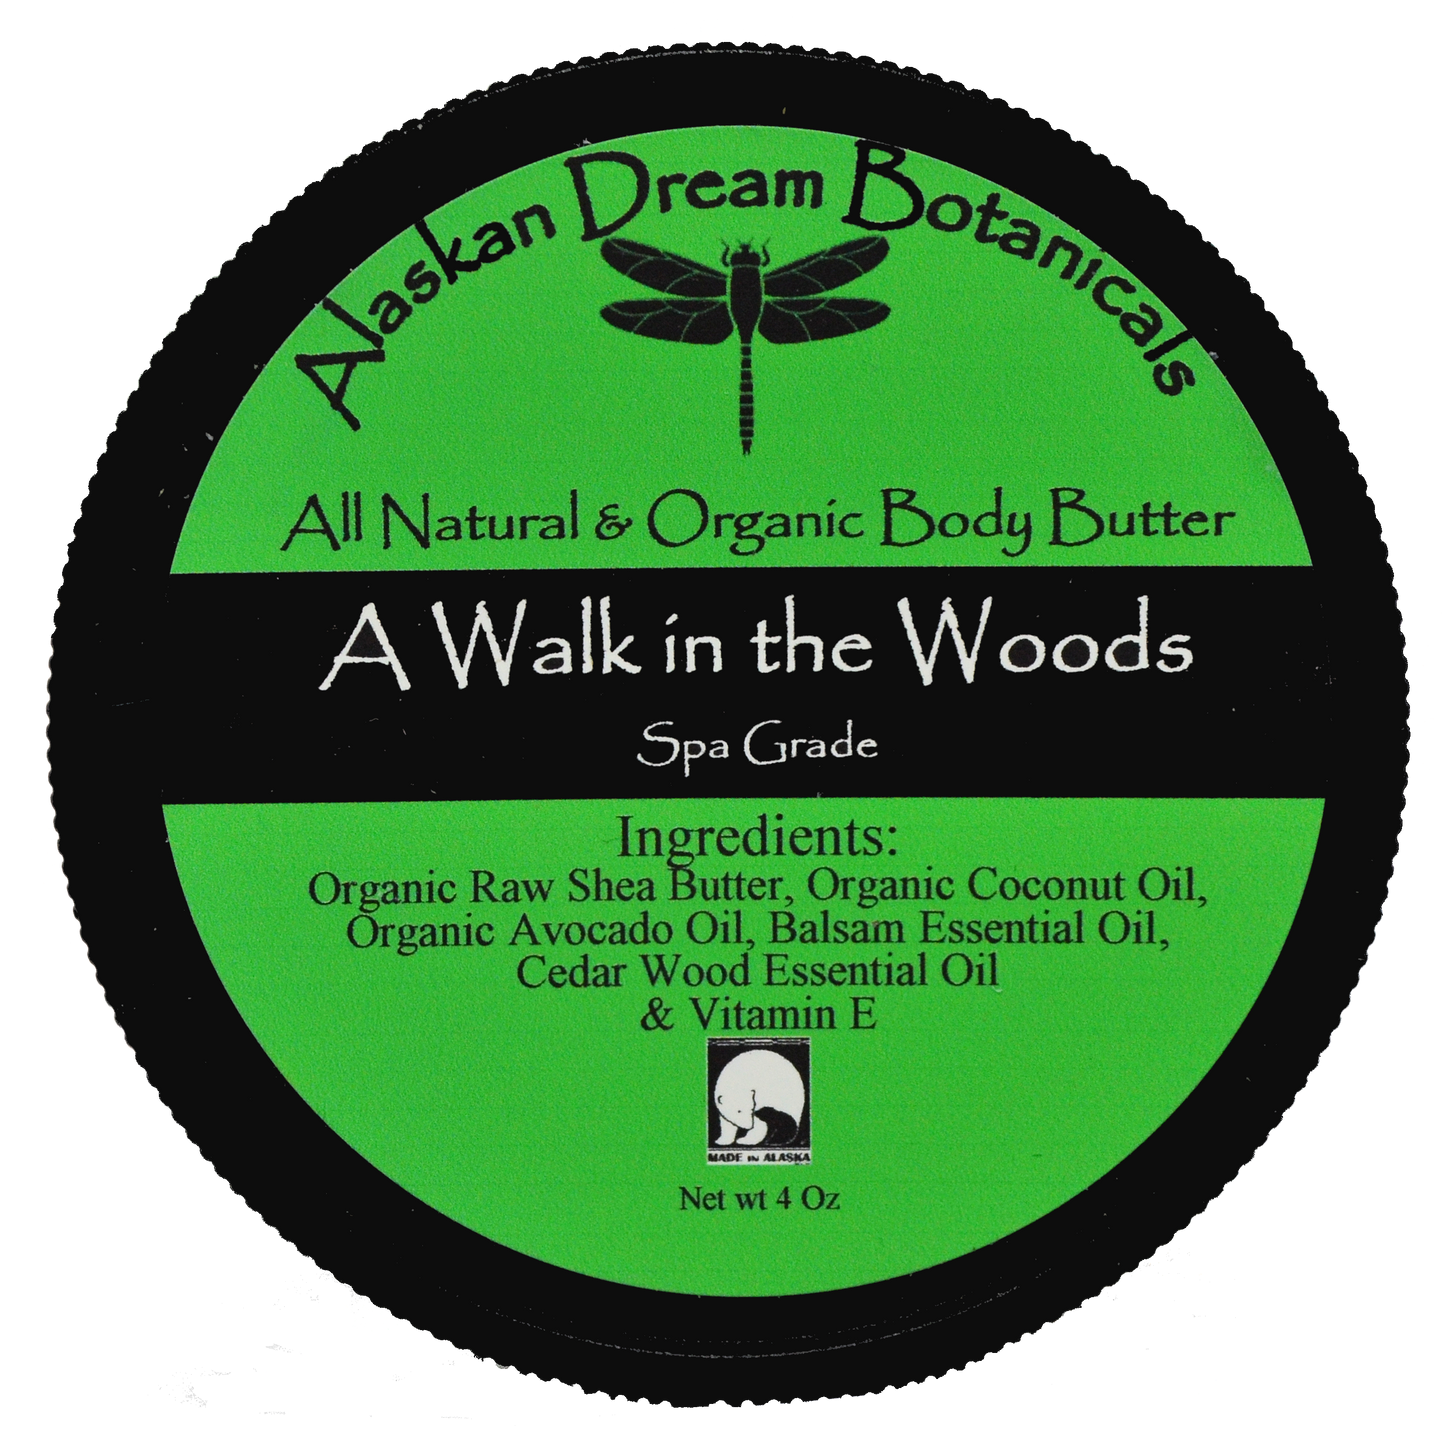 A Walk in the Woods Spa Grade Body Butter - Alaskan Dream Botanicals